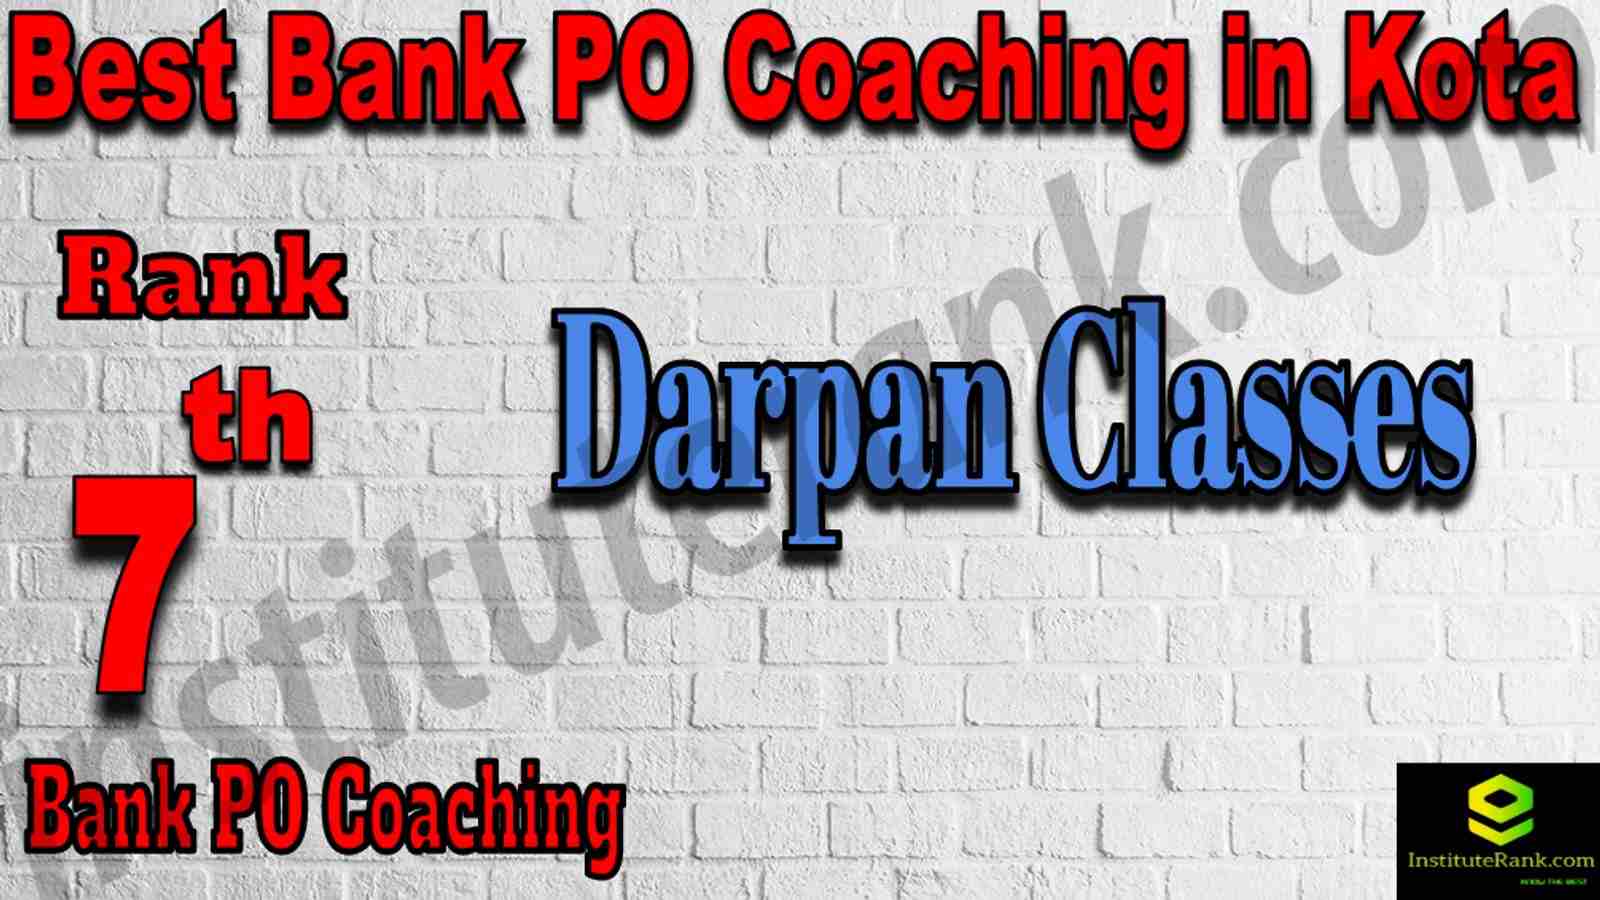 7th Best Bank PO Coaching in Kota